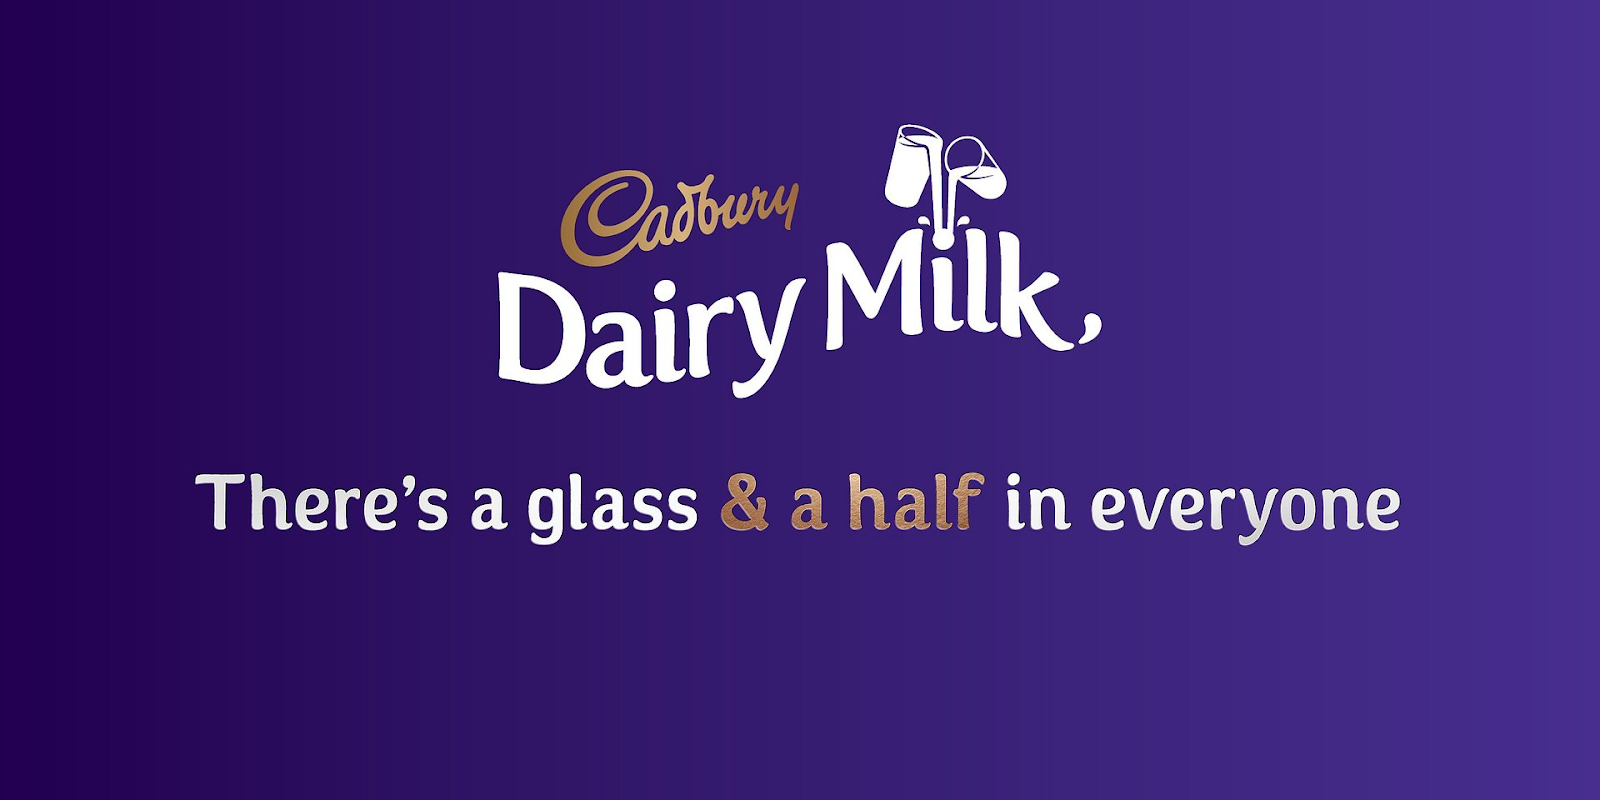 dairy-milk-cadbury-crisis-communication-examples